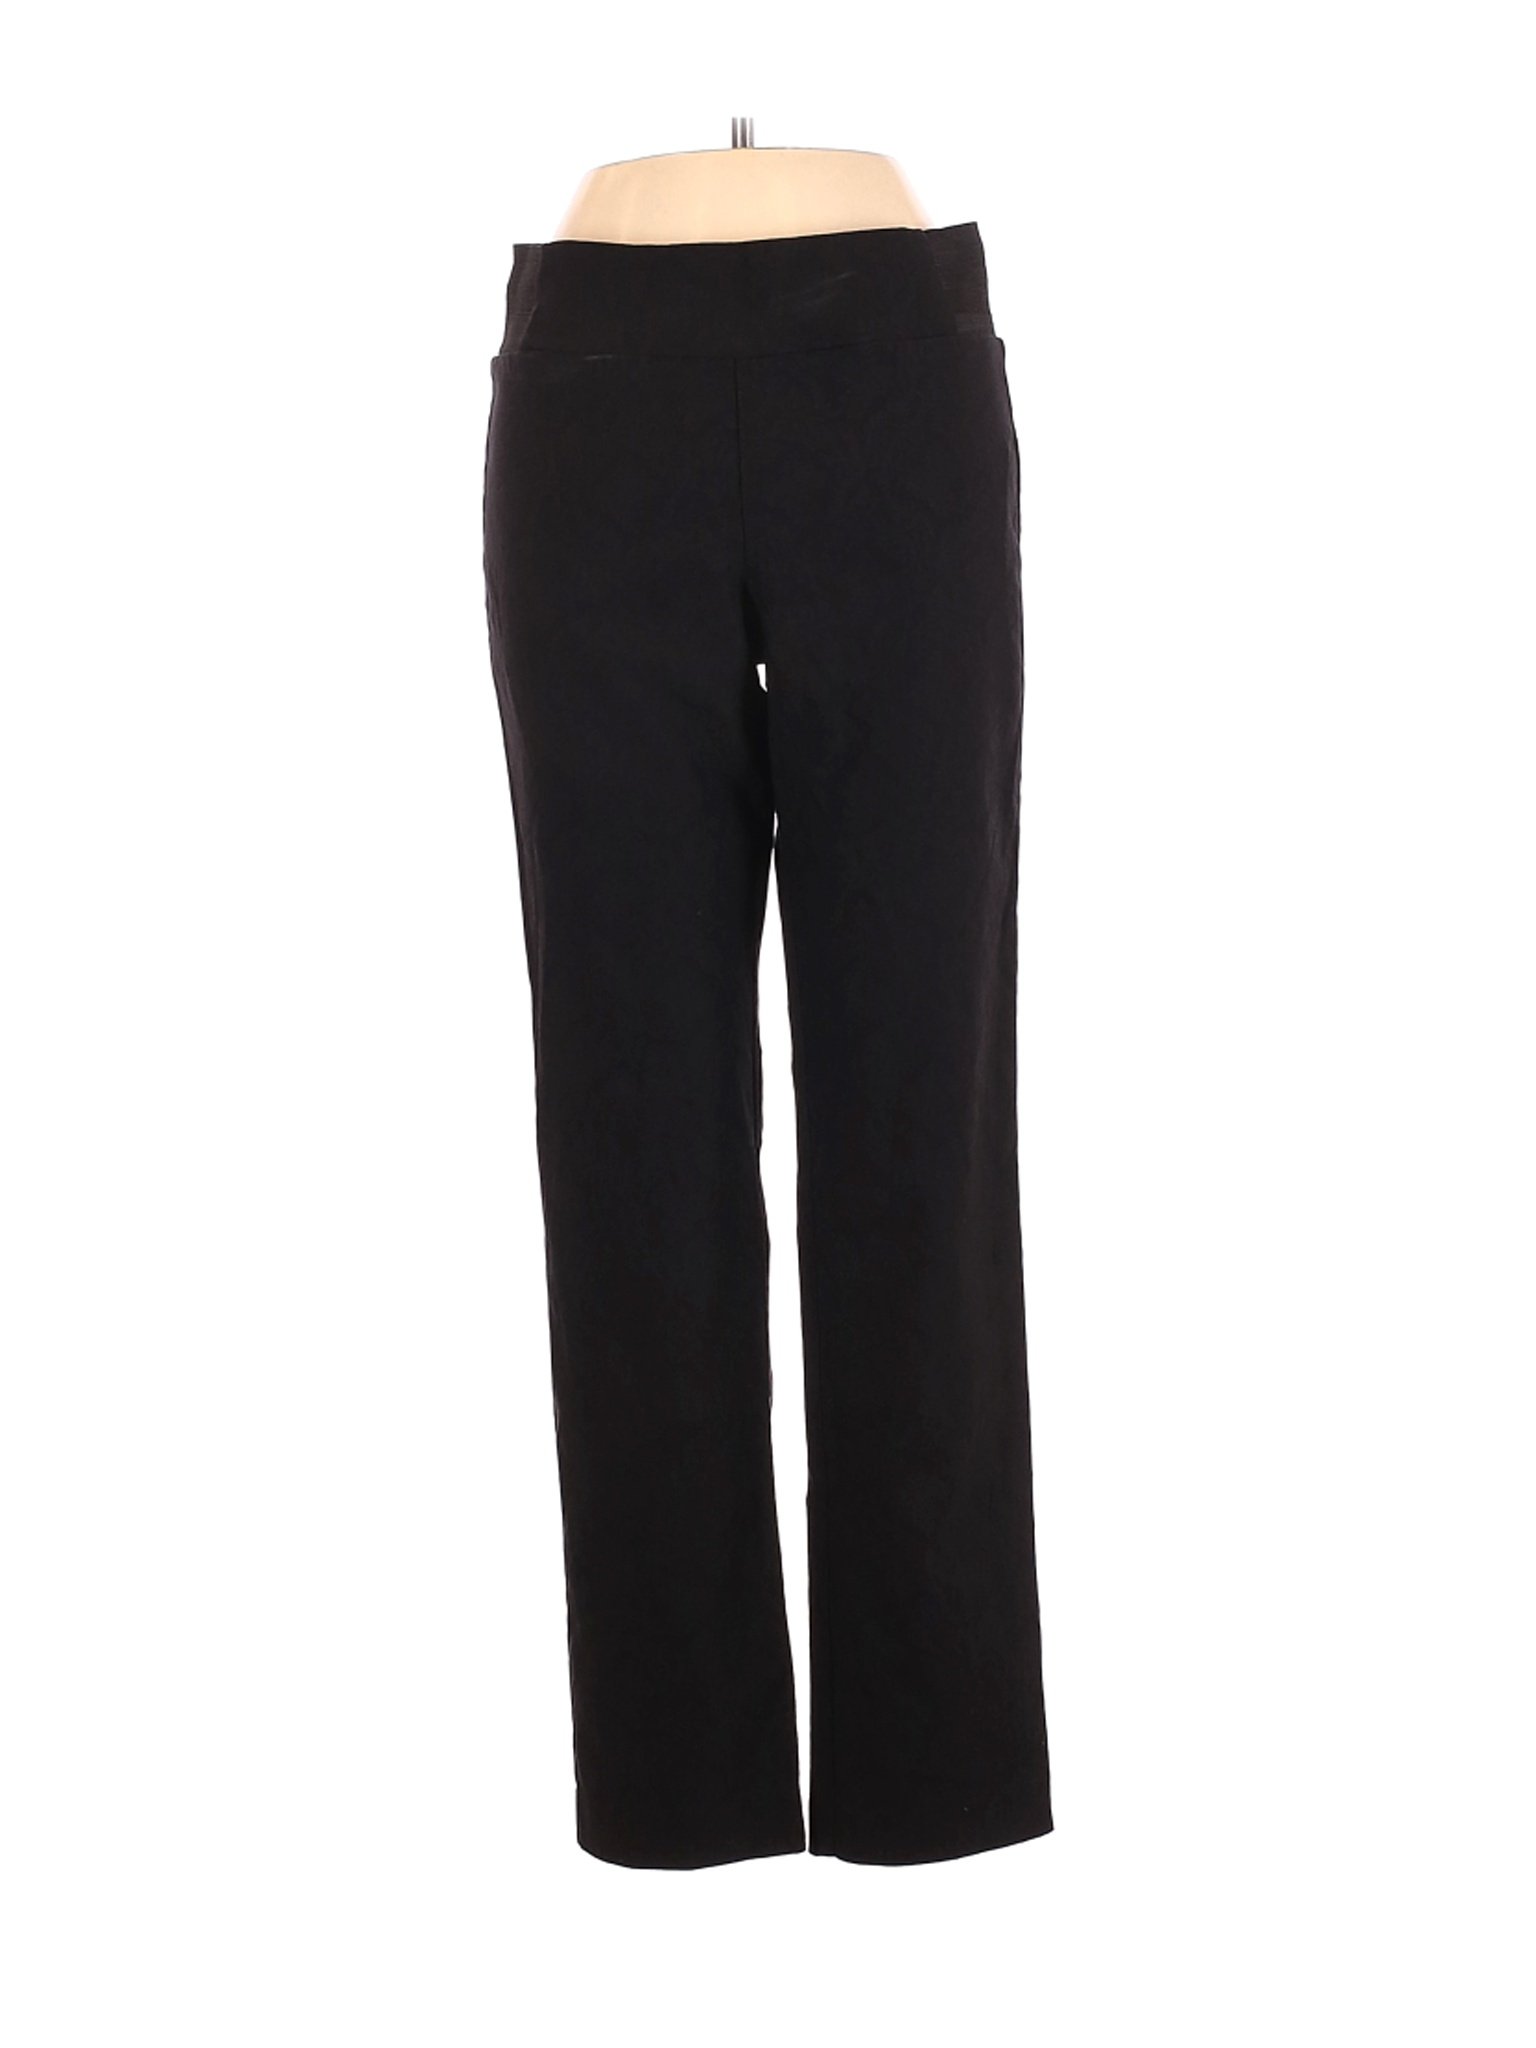 Margaret M Solid Black Casual Pants Size S - 82% off | thredUP